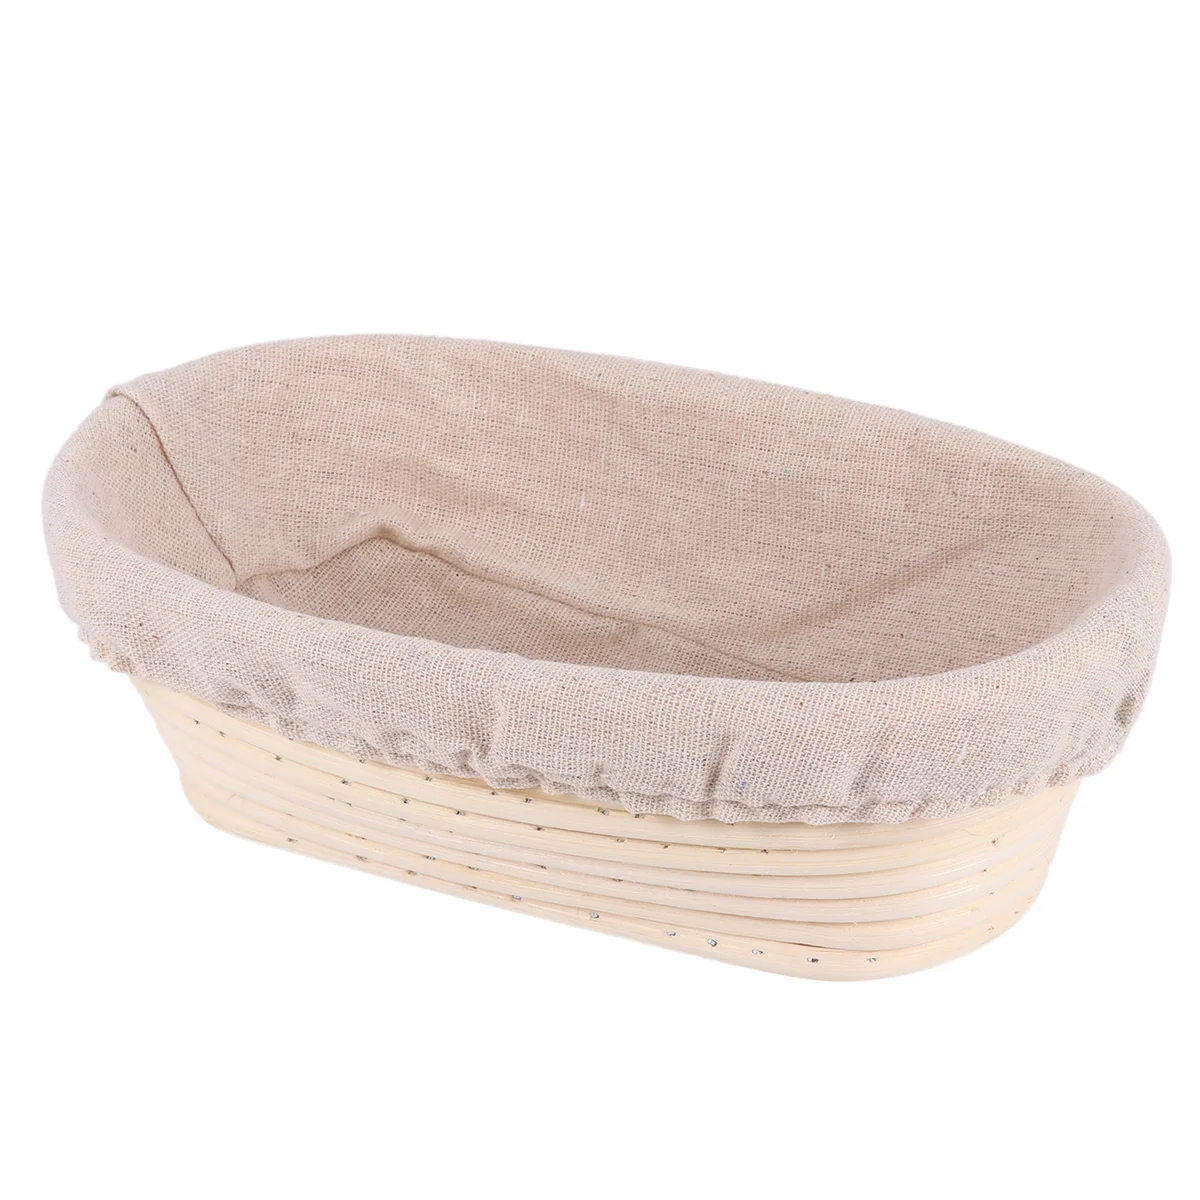 

1PCS Oval Bread Proofing Baskets for Sourdough Bread, Sourdough Proofing Basket Set for Bread Making for Kitchen ( 25x15x8cm )